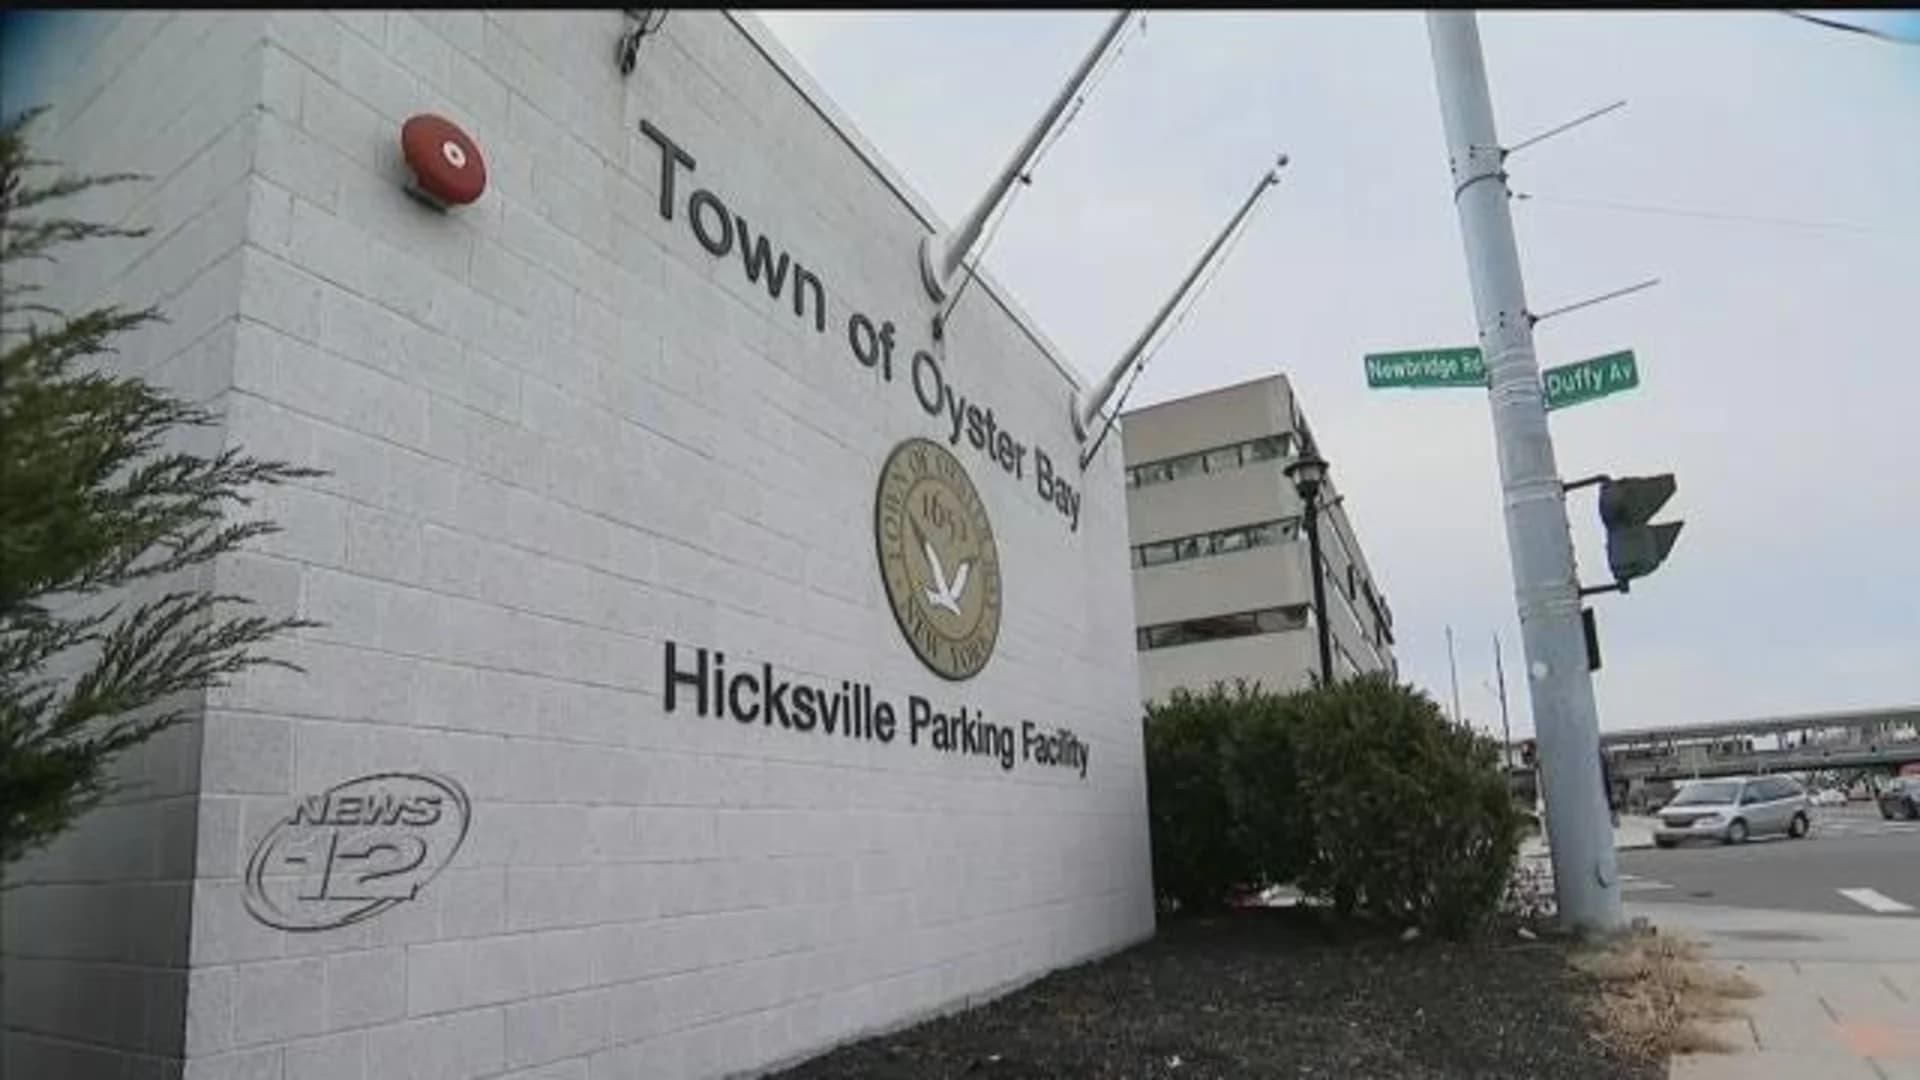 Parking garage near Hicksville LIRR station set to reopen in early 2019